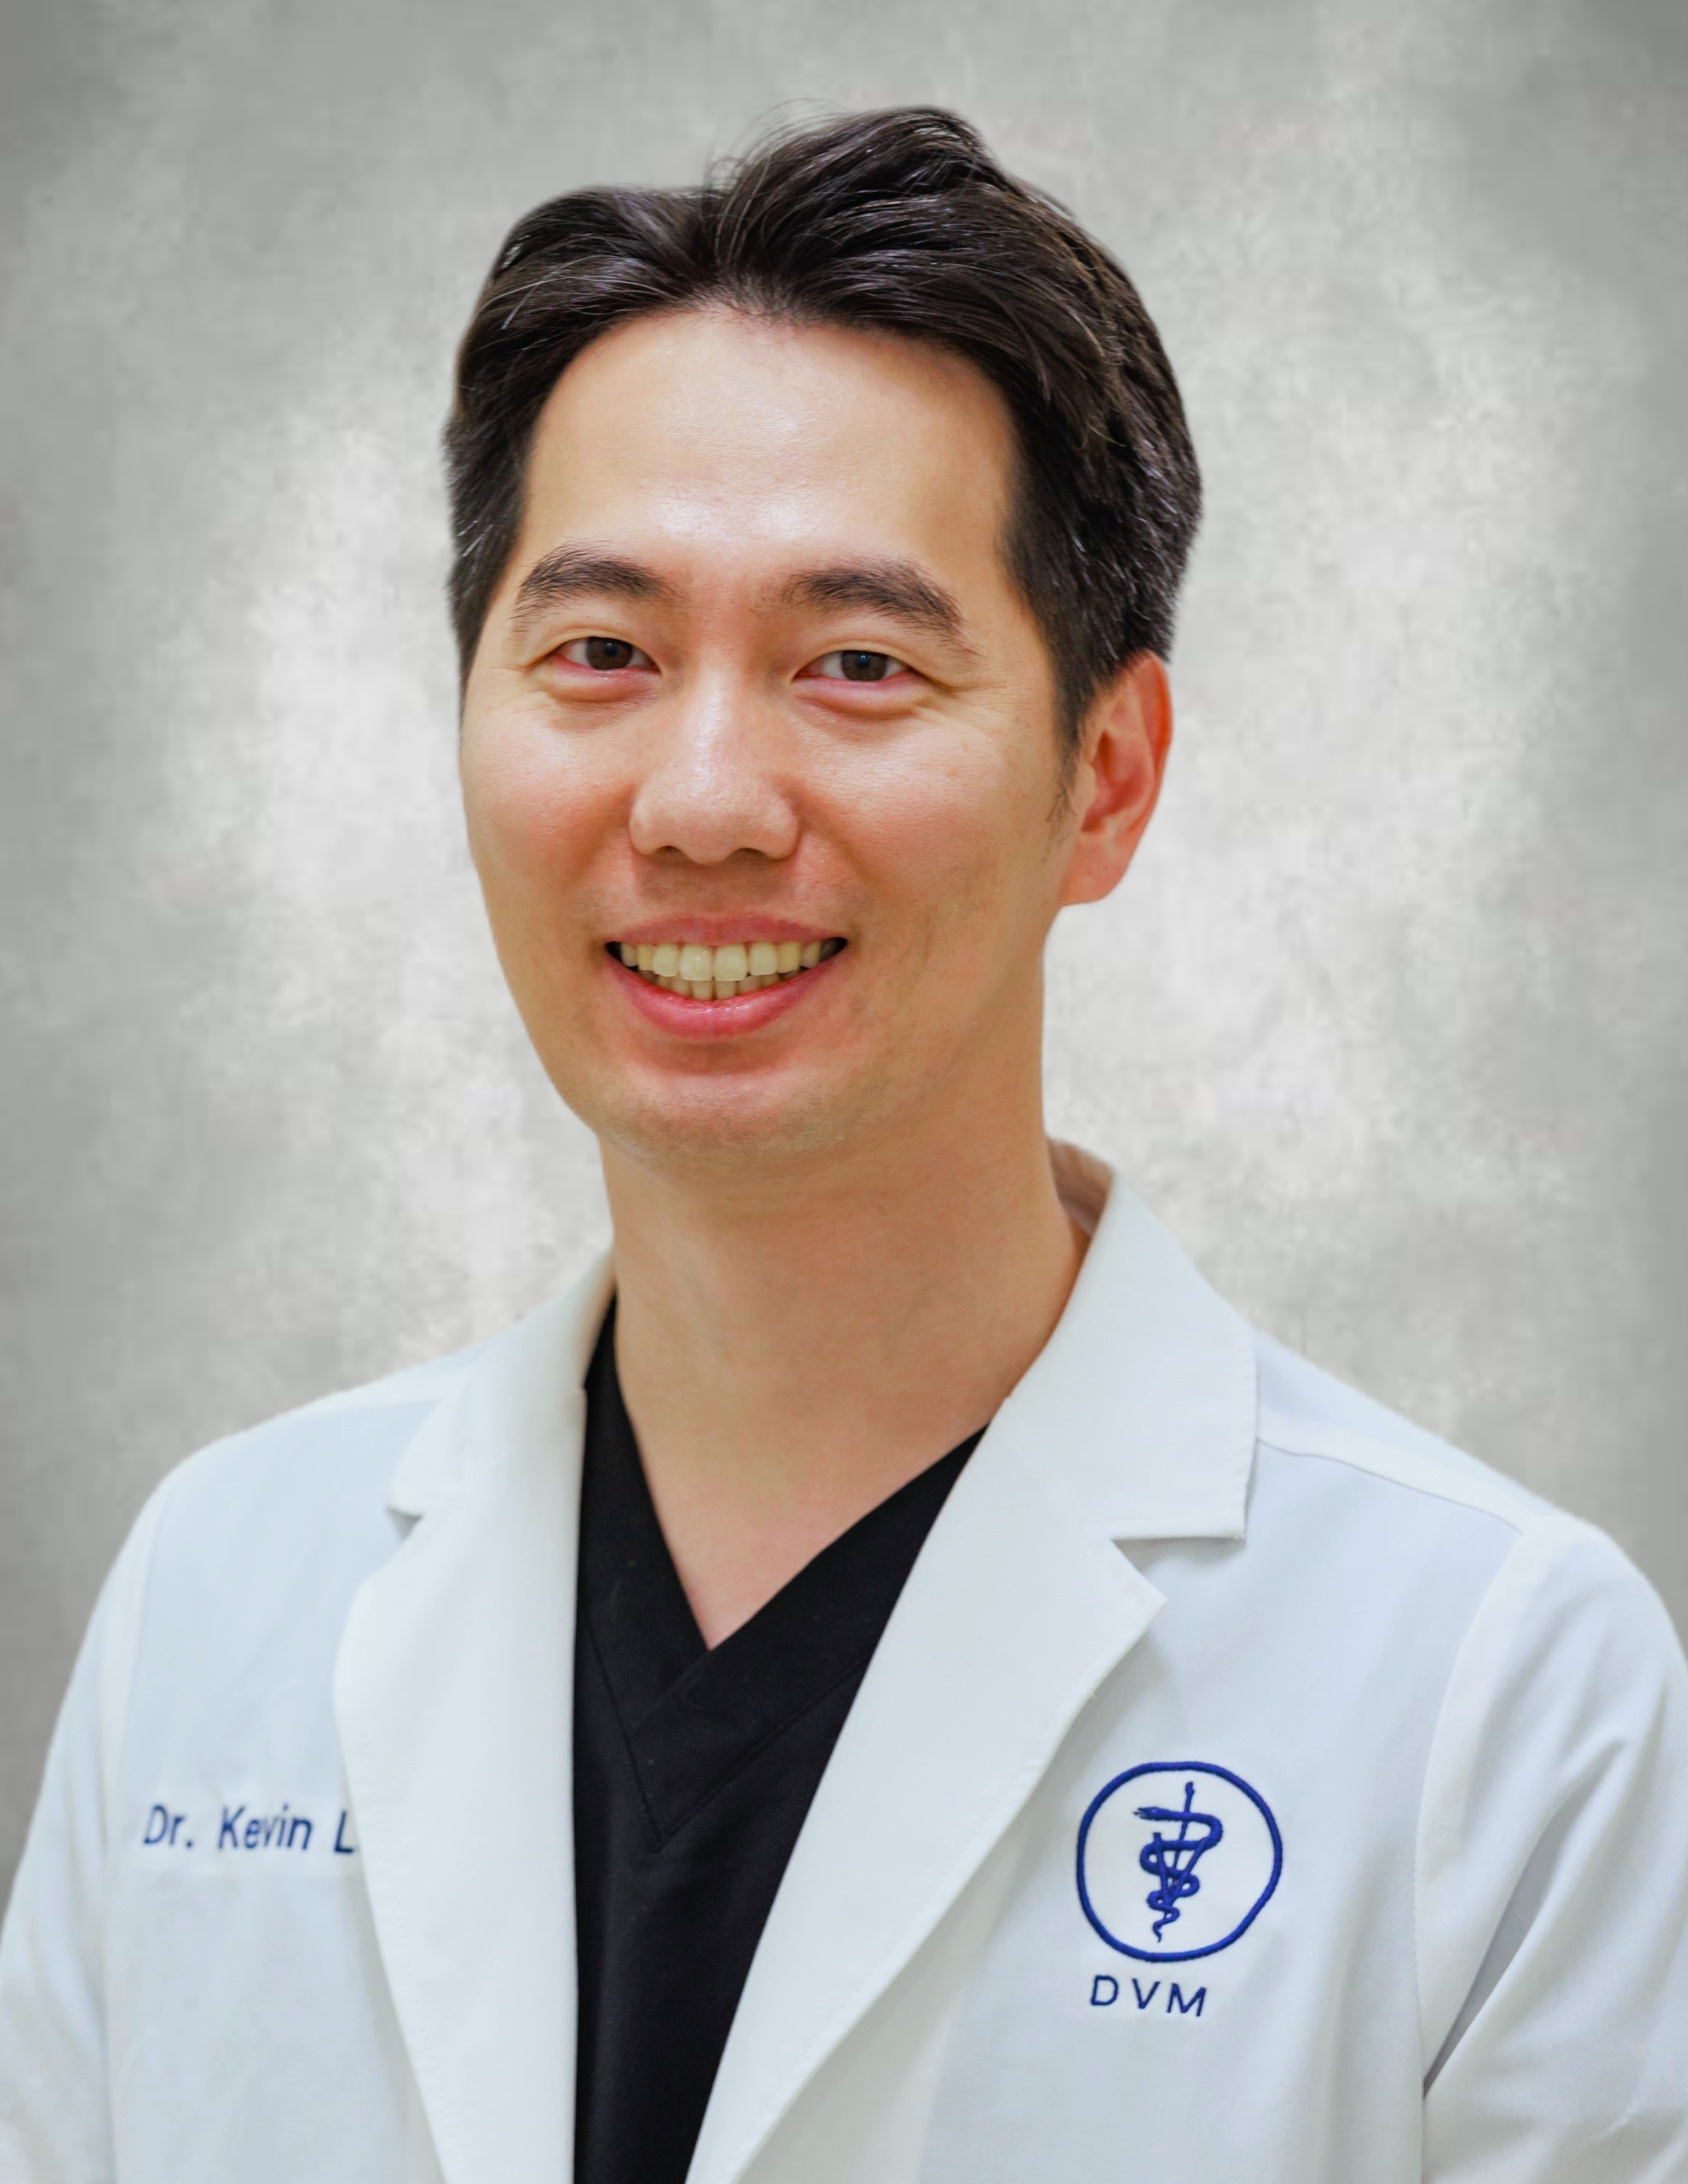 Dr. Kai Lee smiling in his lab coat